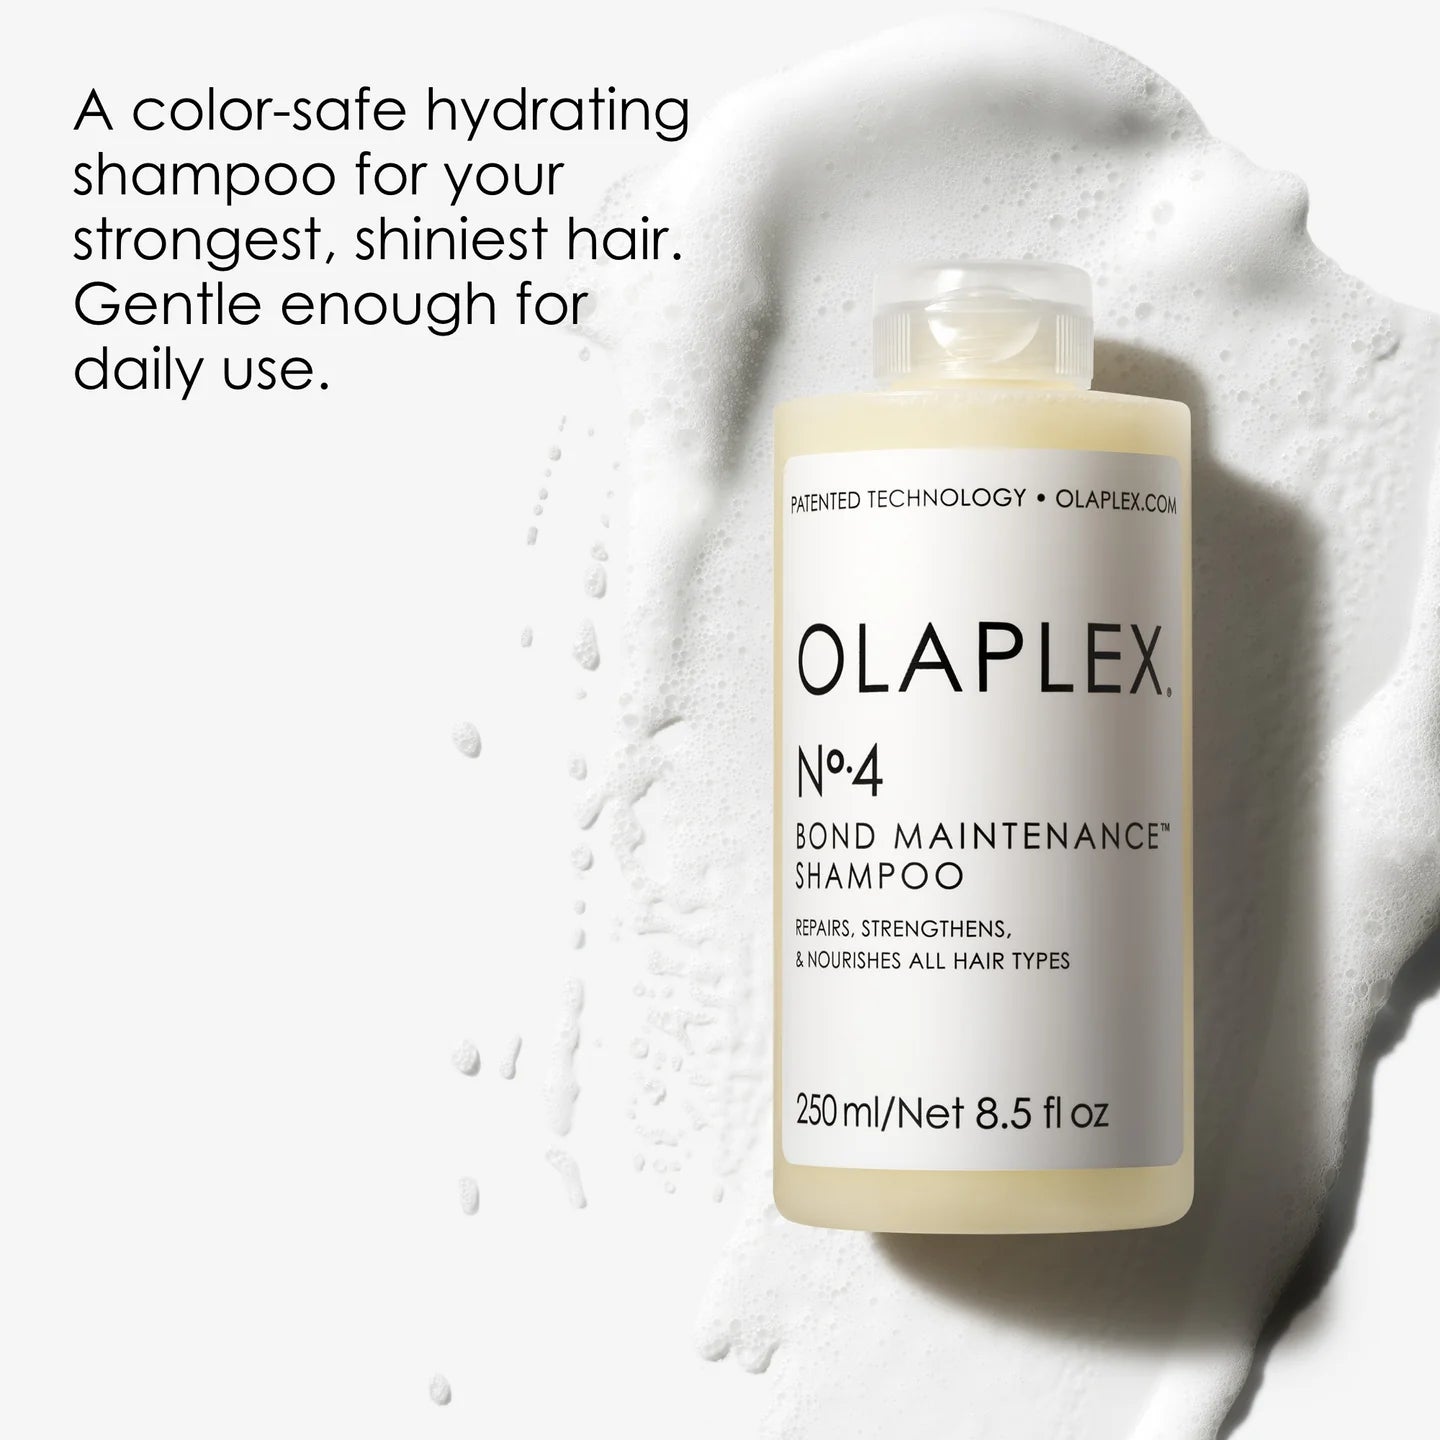 OLAPLEX Nº.4 - Bond Maintenance Shampoo